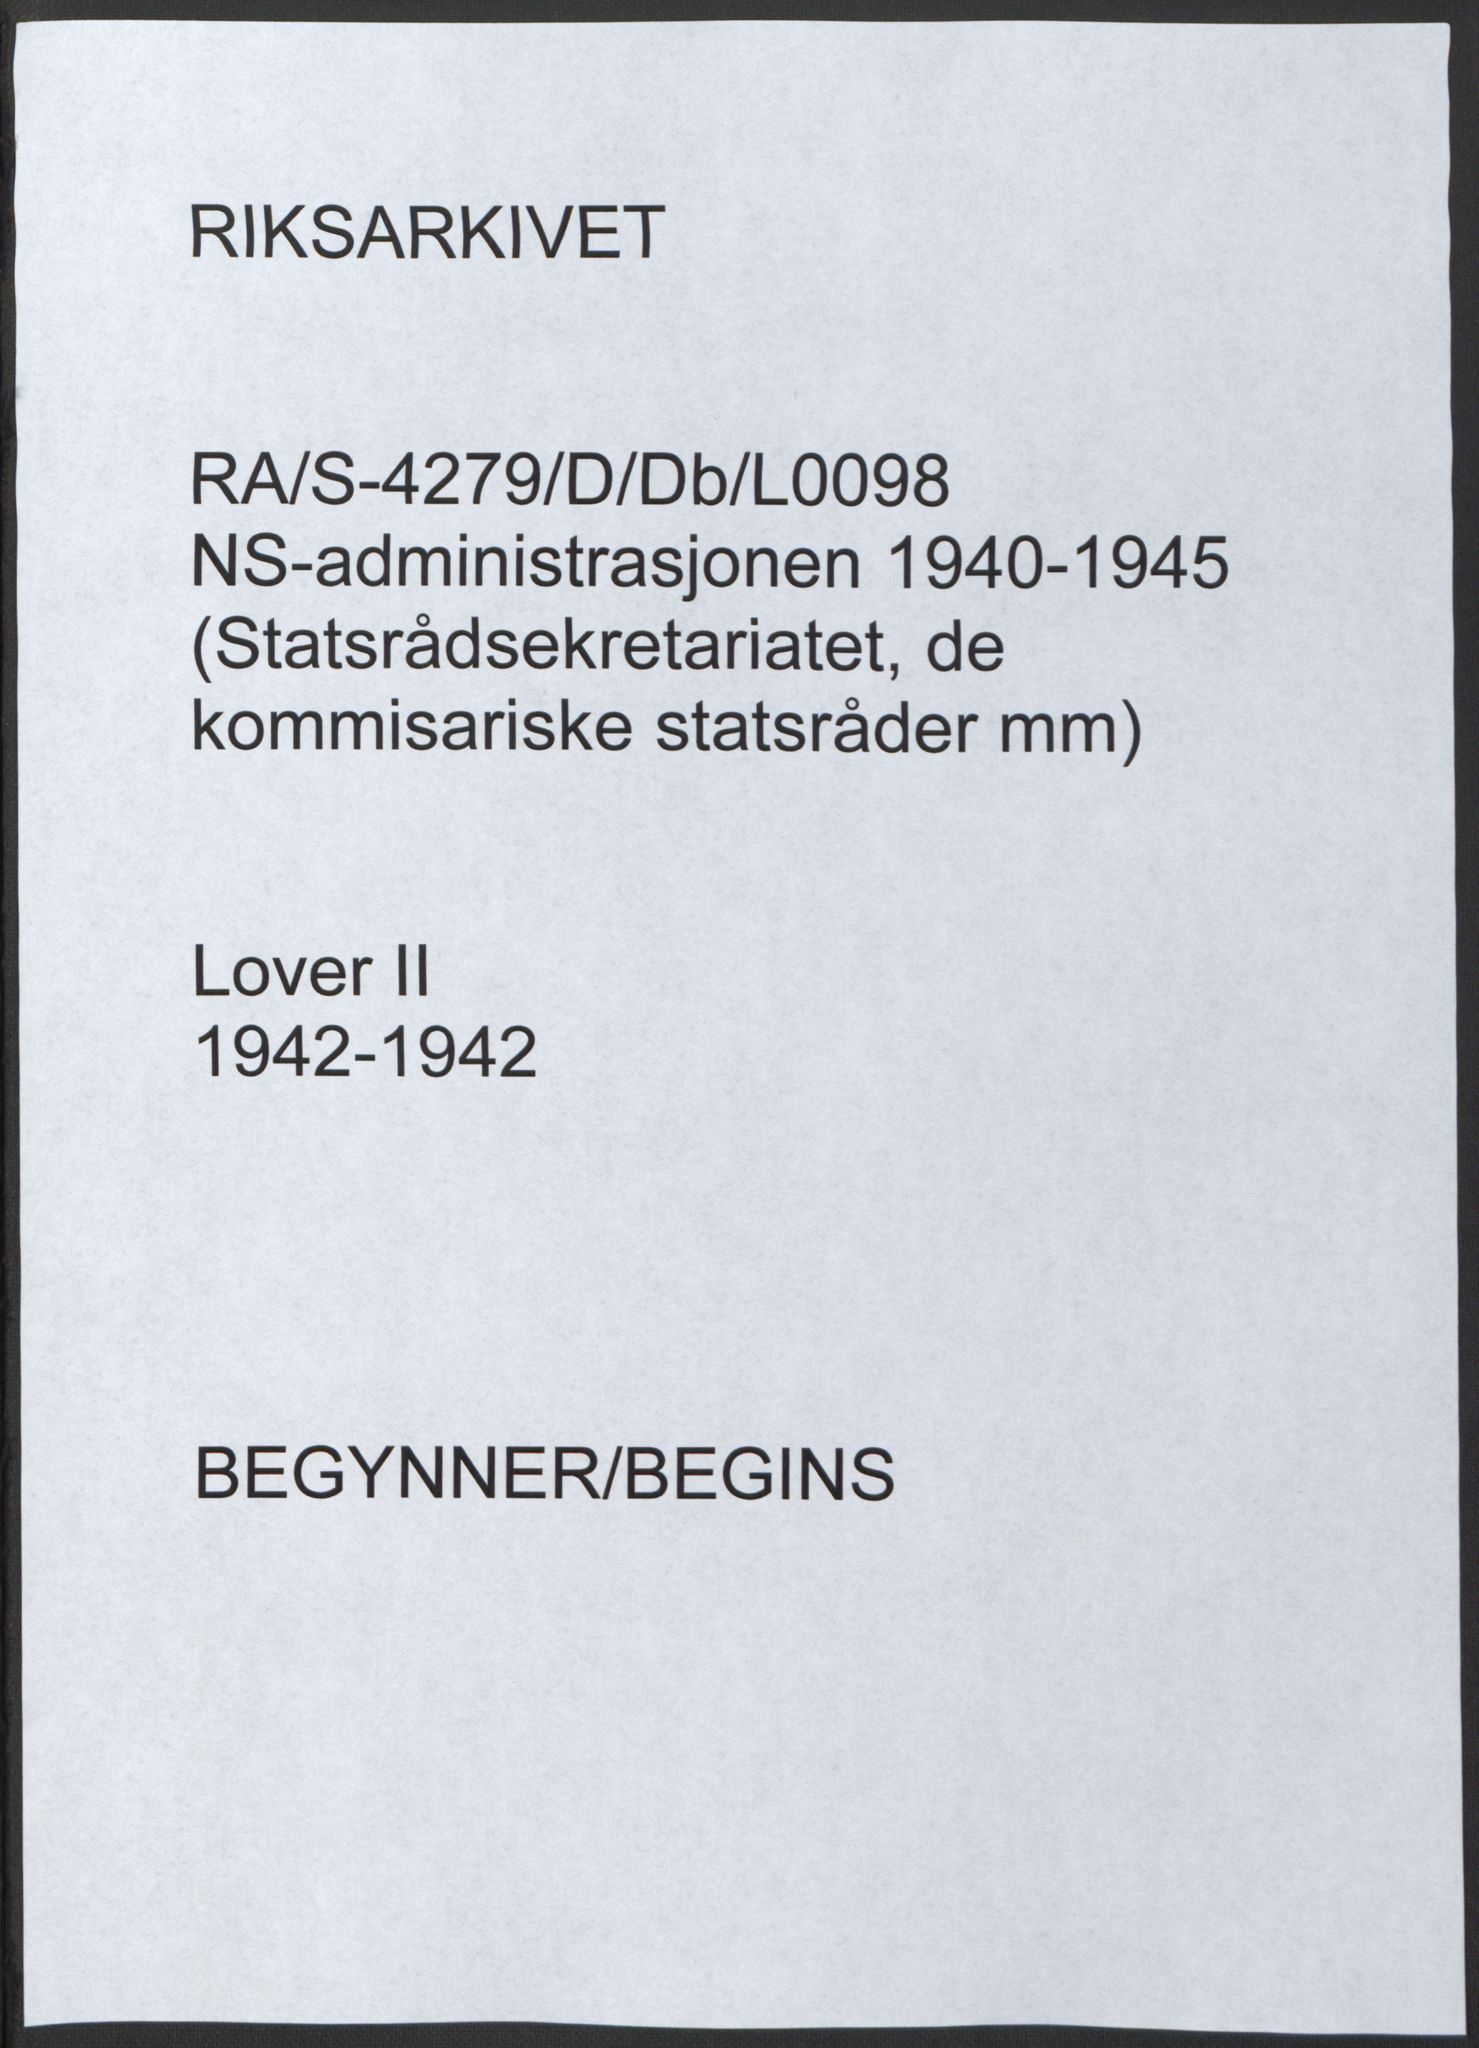 NS-administrasjonen 1940-1945 (Statsrådsekretariatet, de kommisariske statsråder mm), RA/S-4279/D/Db/L0098: Lover II, 1942, s. 1